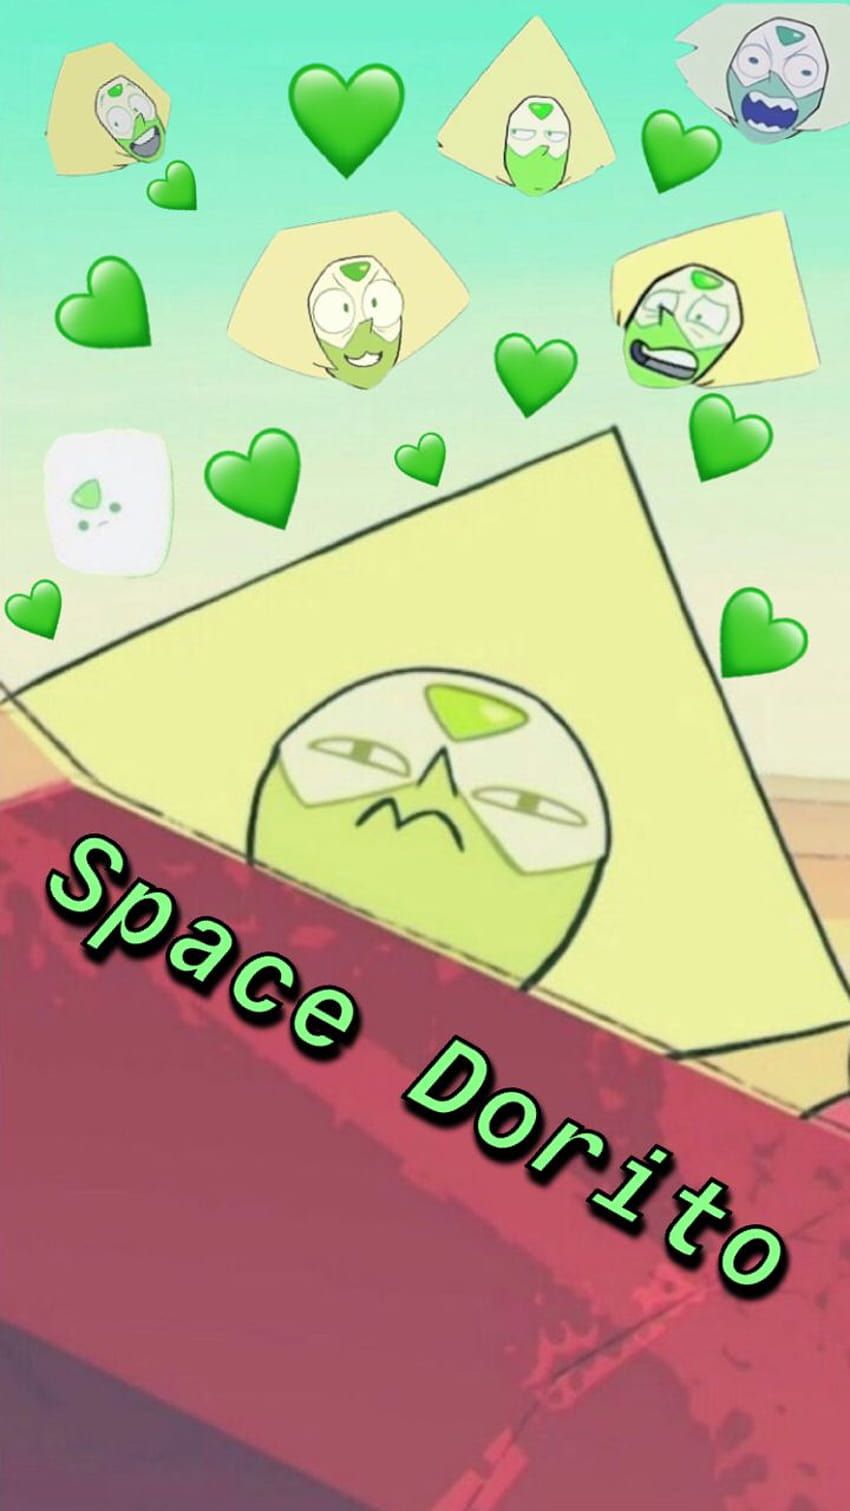 Space dori - screenshot - Doritos